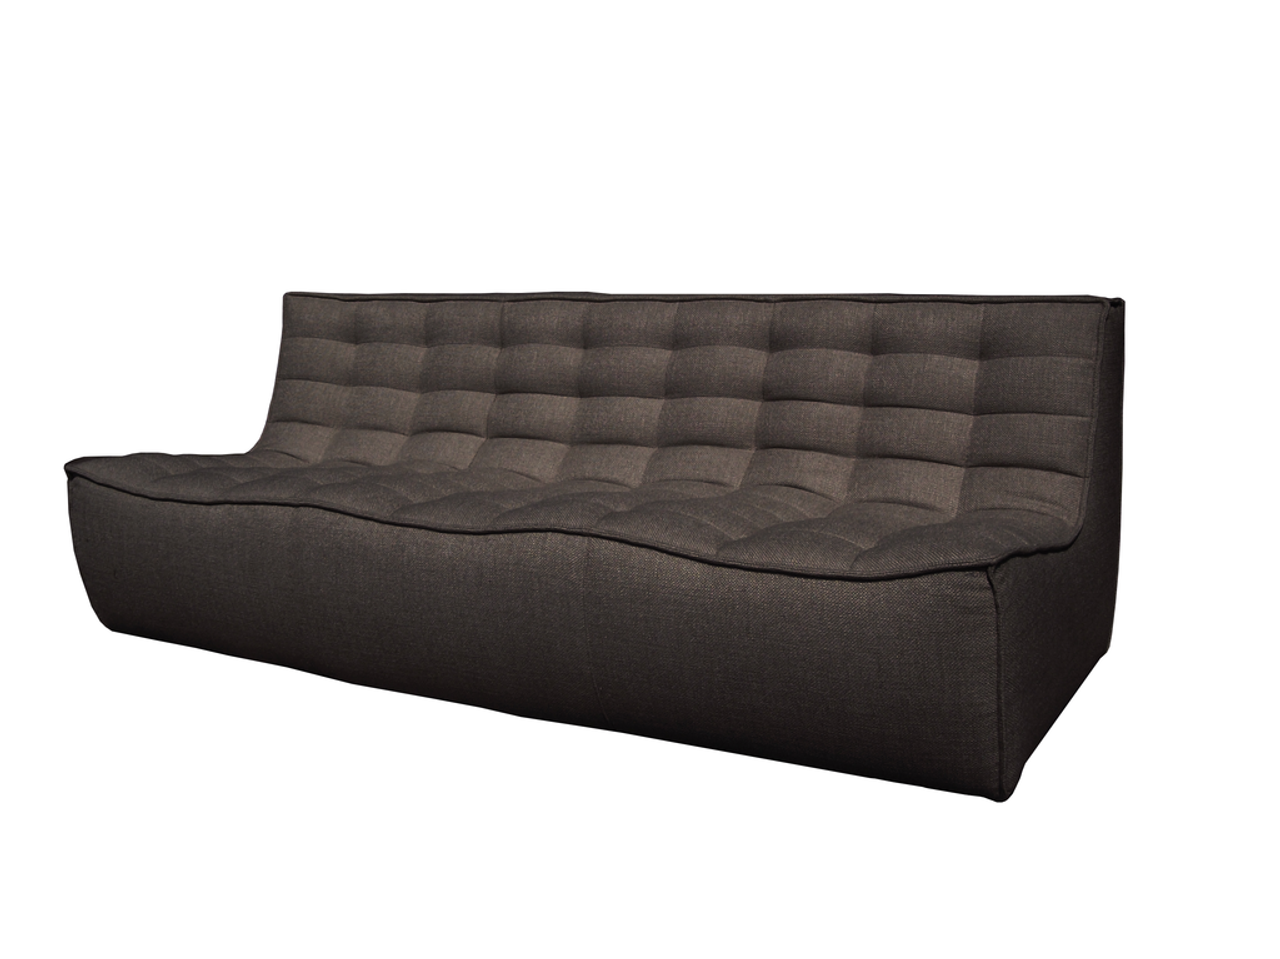 Roset Modern Modular Sectional Sofa - 3 Seater